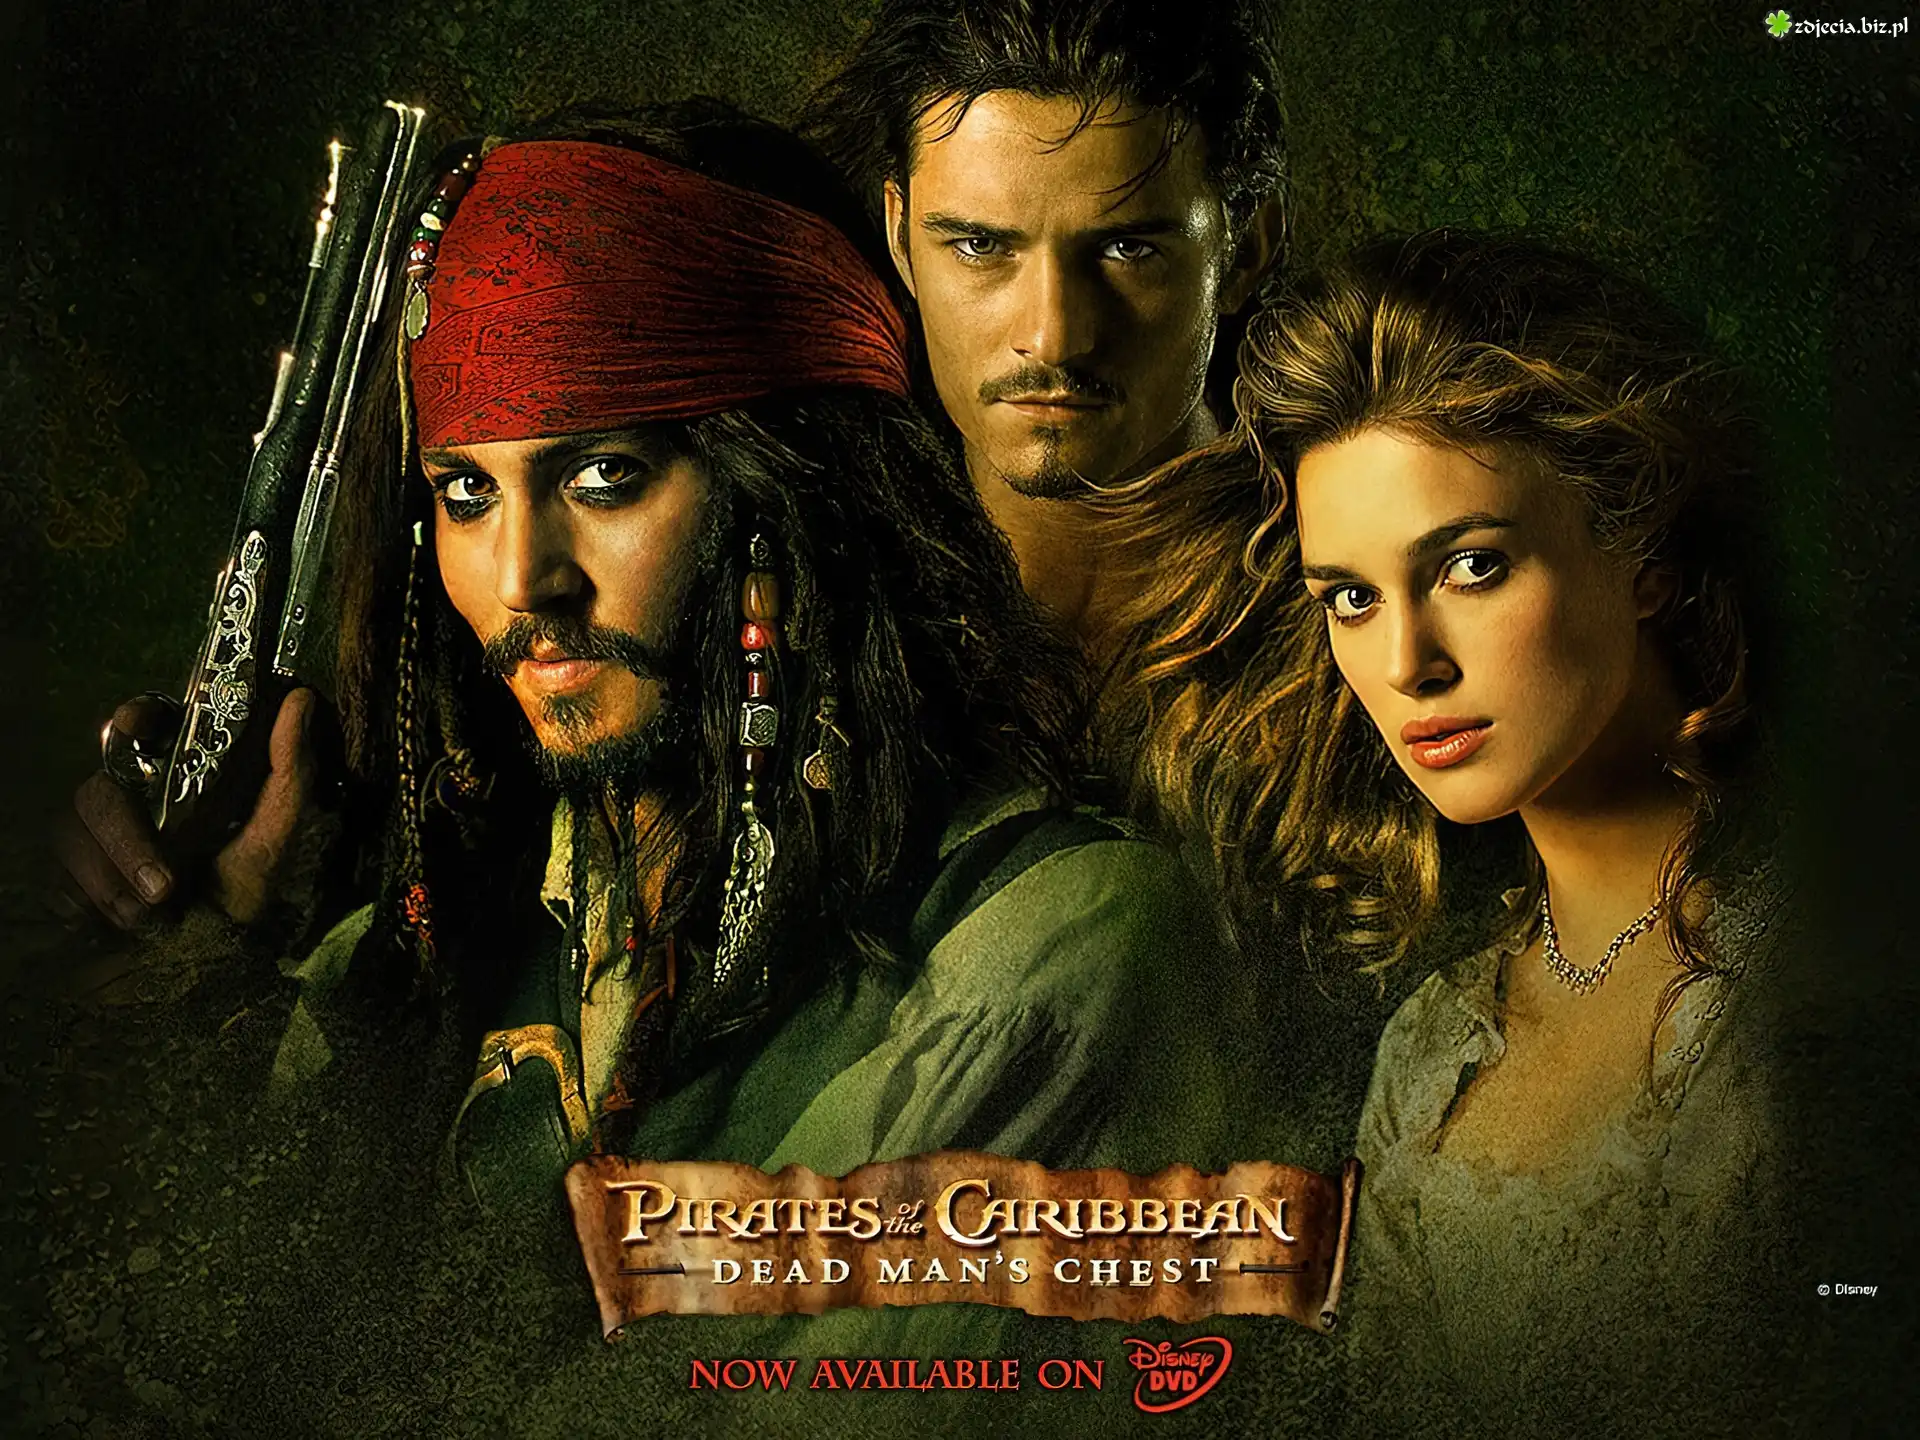 Piraci z Karaibów, Pirates of the Caribbean, Aktor, Johnny Depp, Orlando Bloom, Aktorka, Keira Knightley